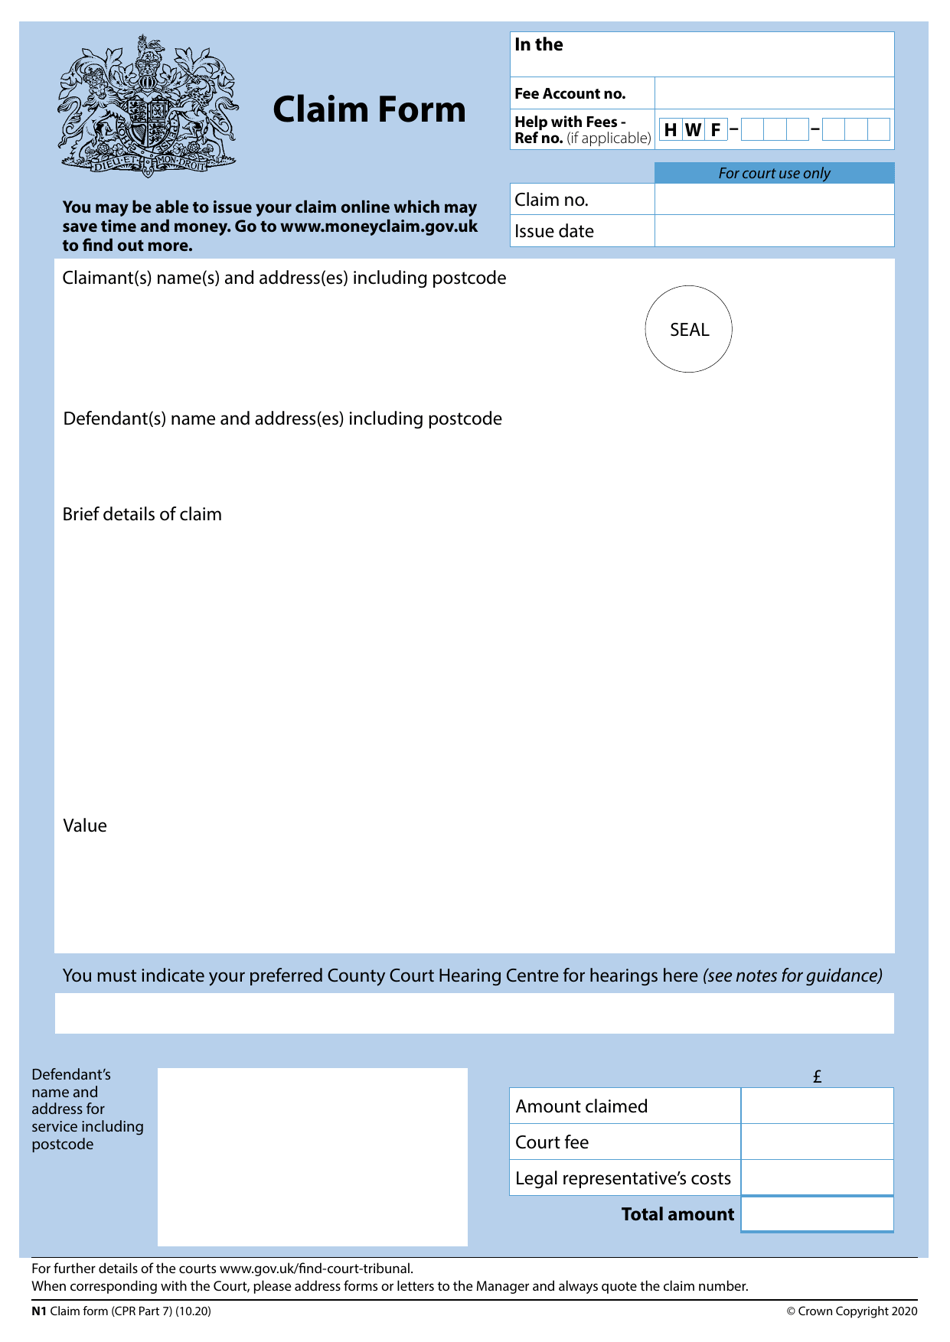 Form N1 Claim Form (Cpr Part 7) - United Kingdom, Page 1